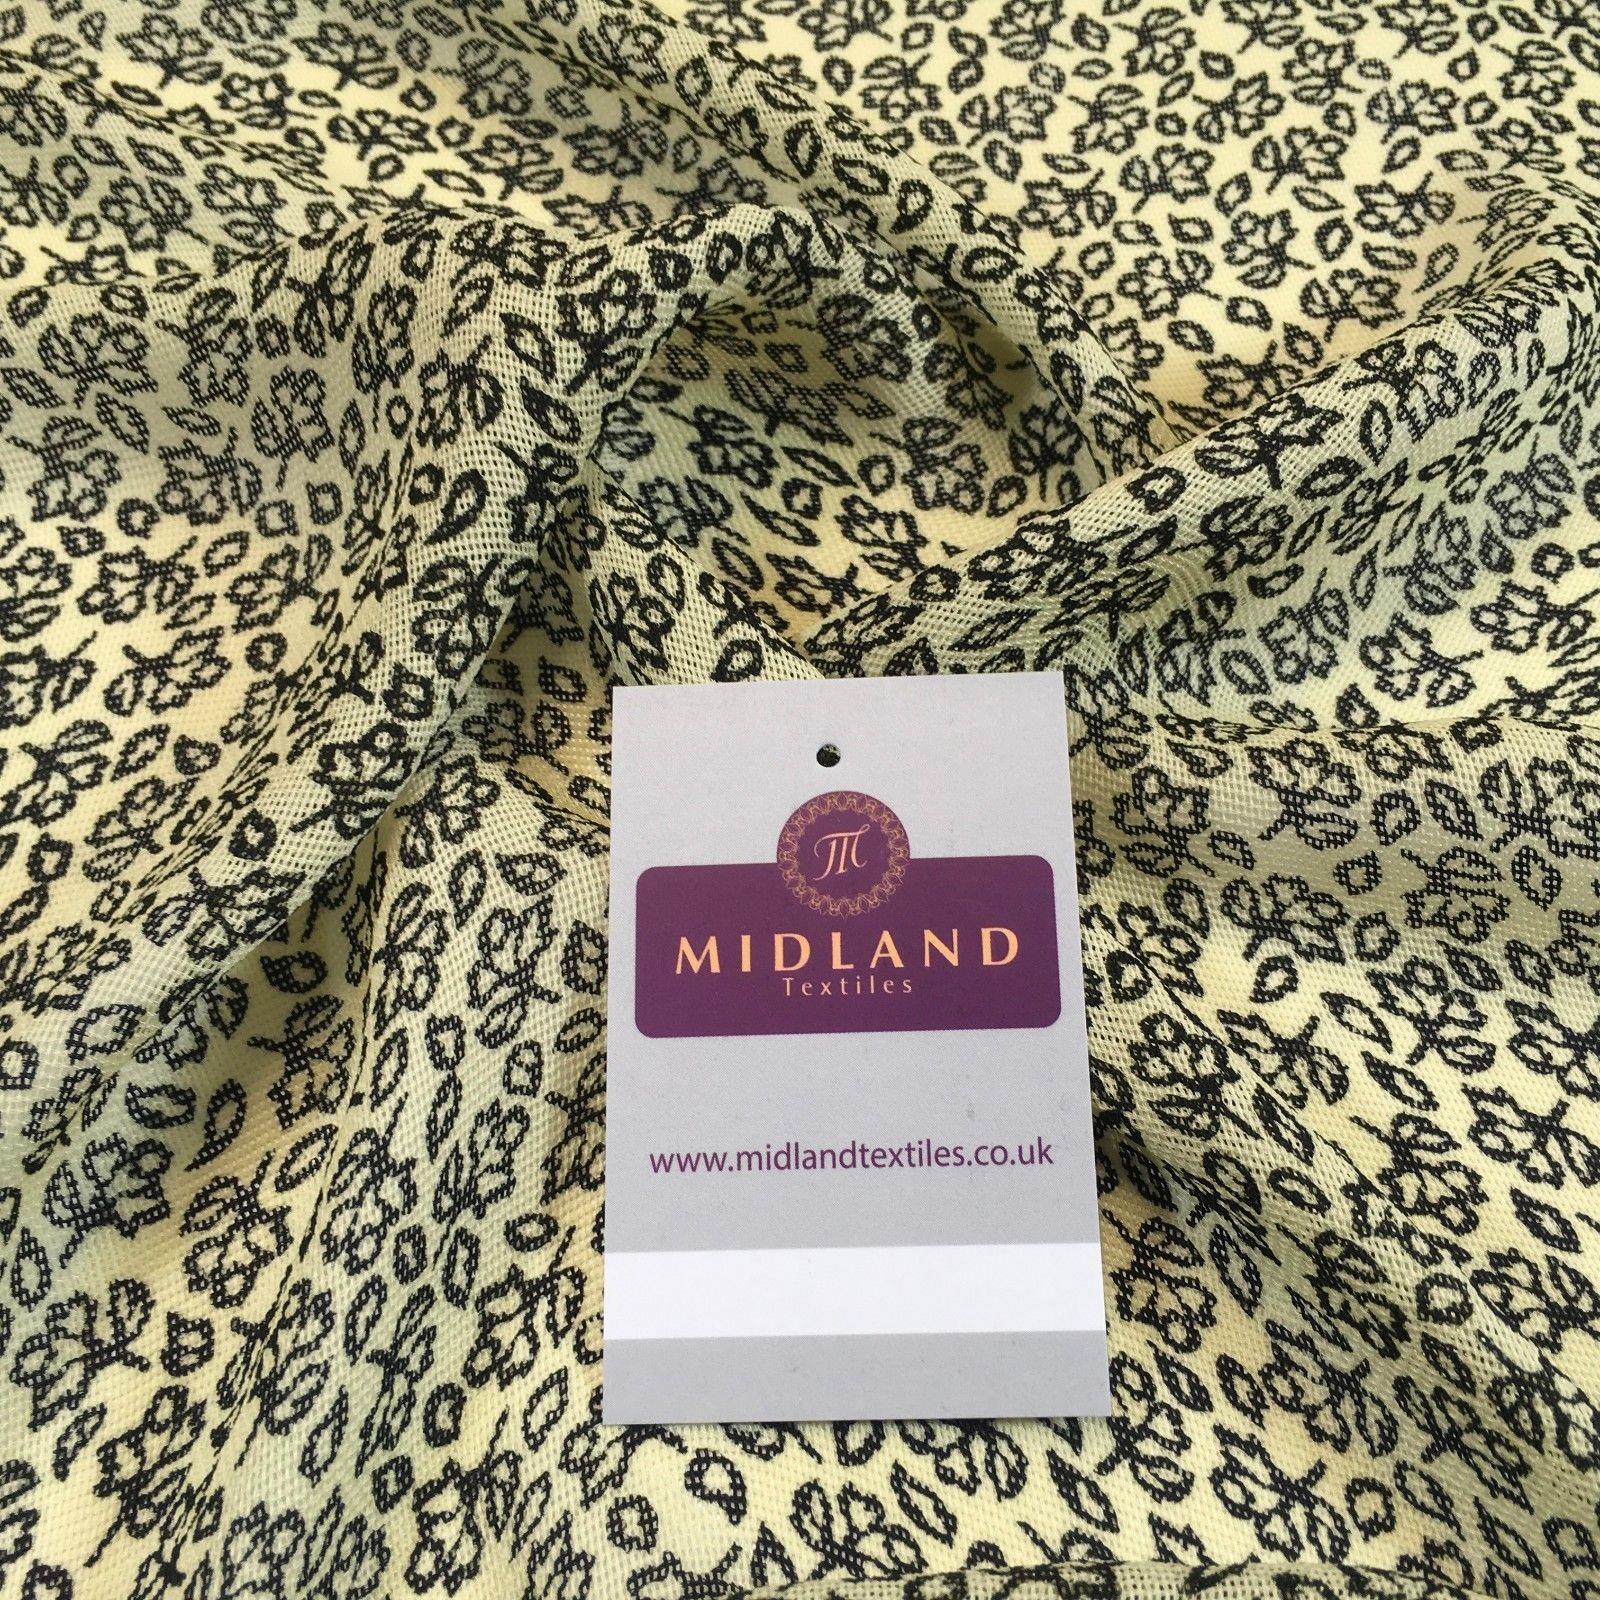 Black Cream Floral textured moss crepe dress fabric 44" M145-64 Mtex - Midland Textiles & Fabric